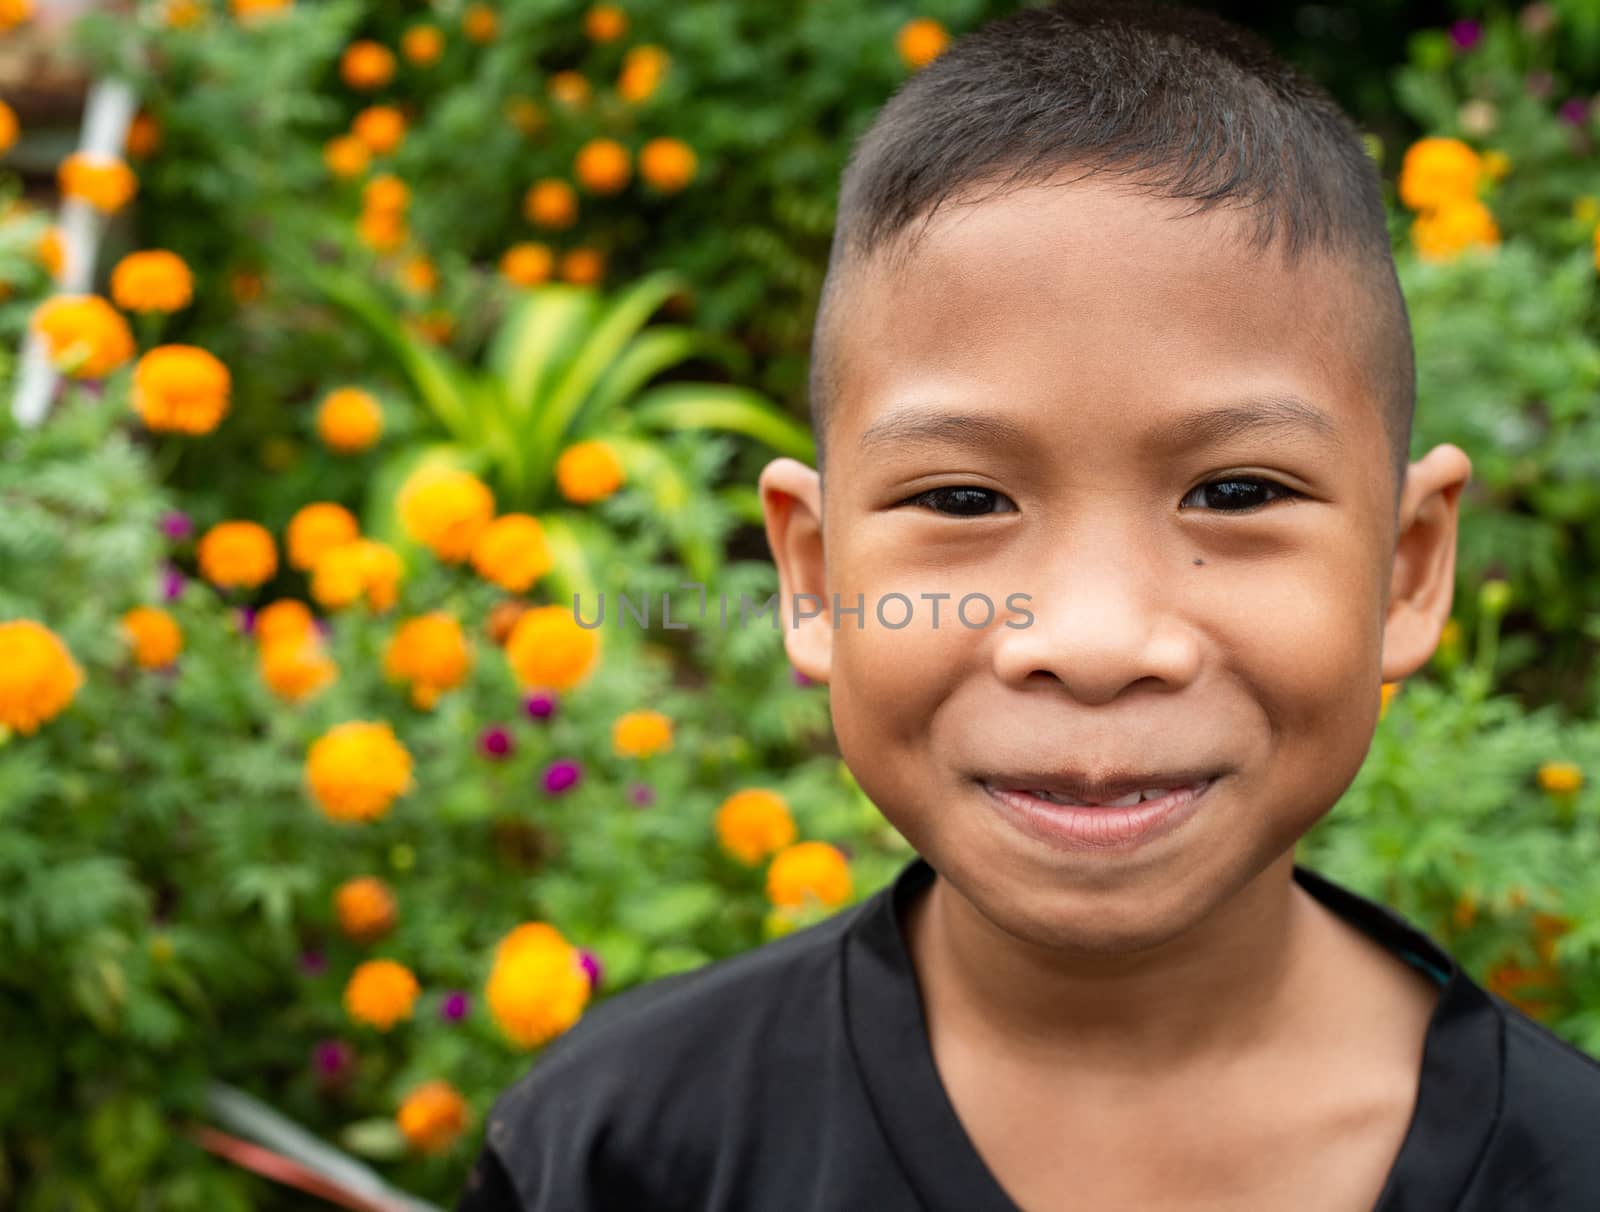 Boy smiling face portrait On a garden background.